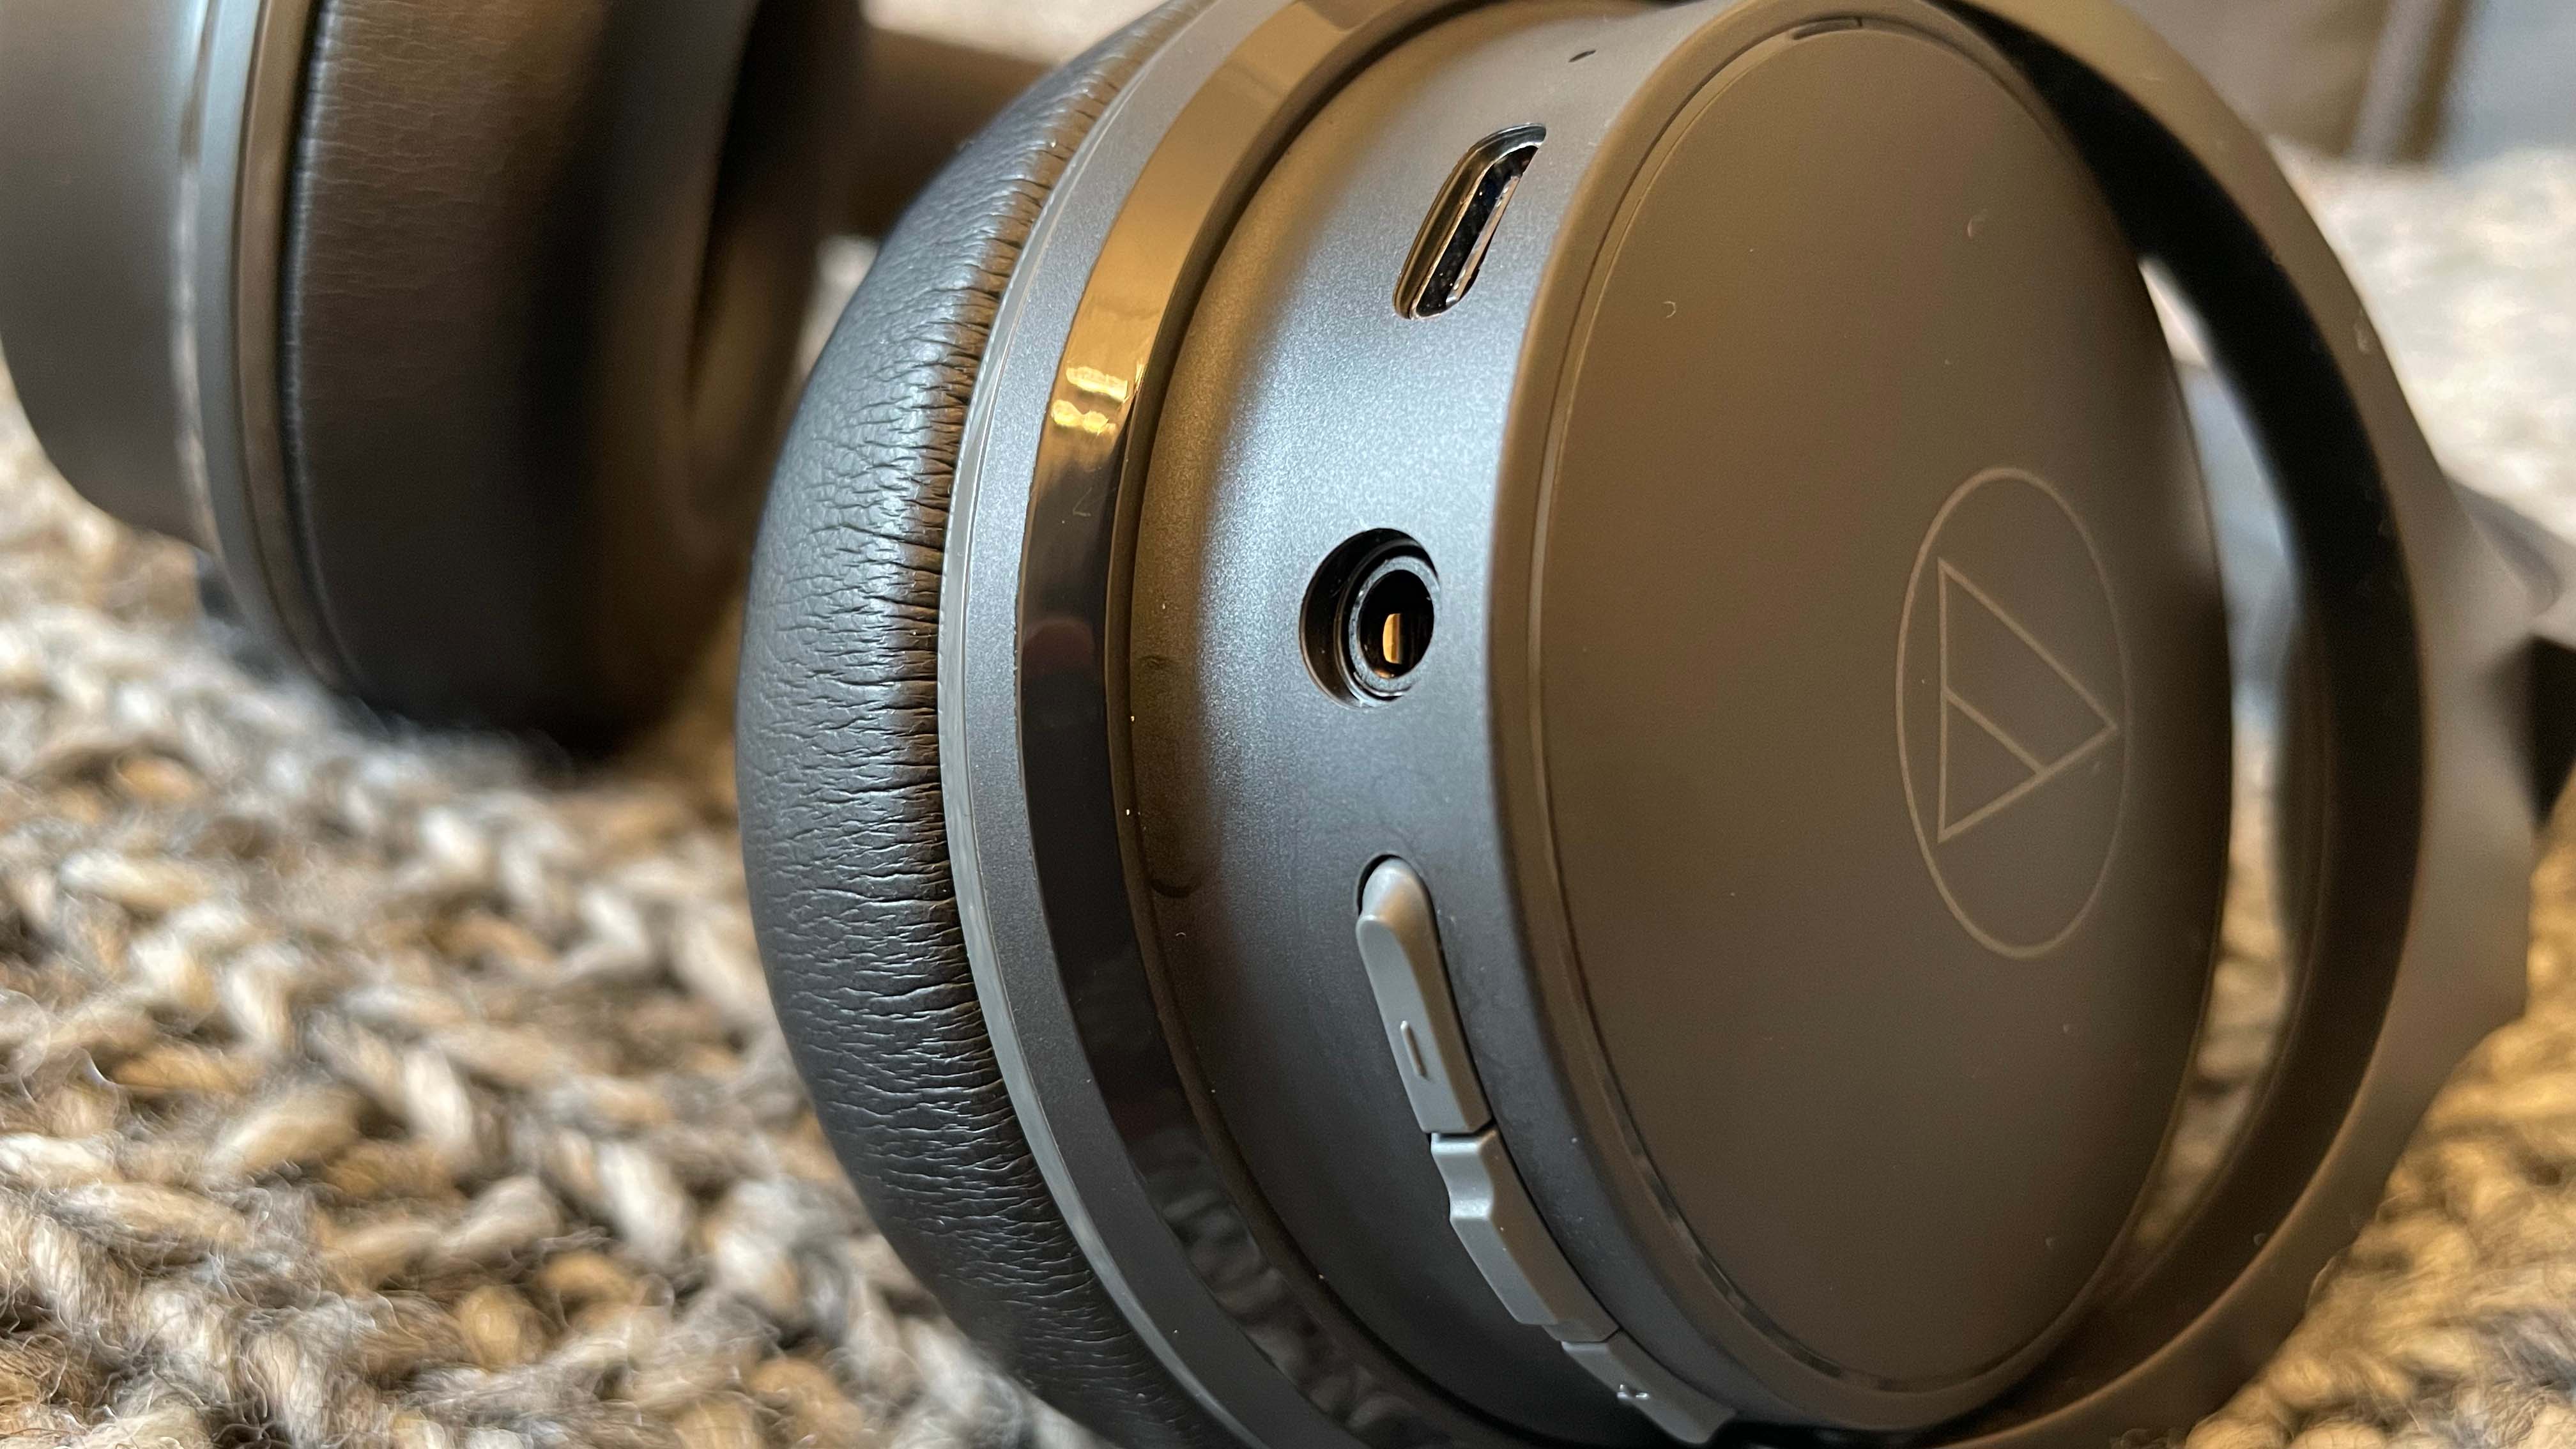 Audio Technica headphones